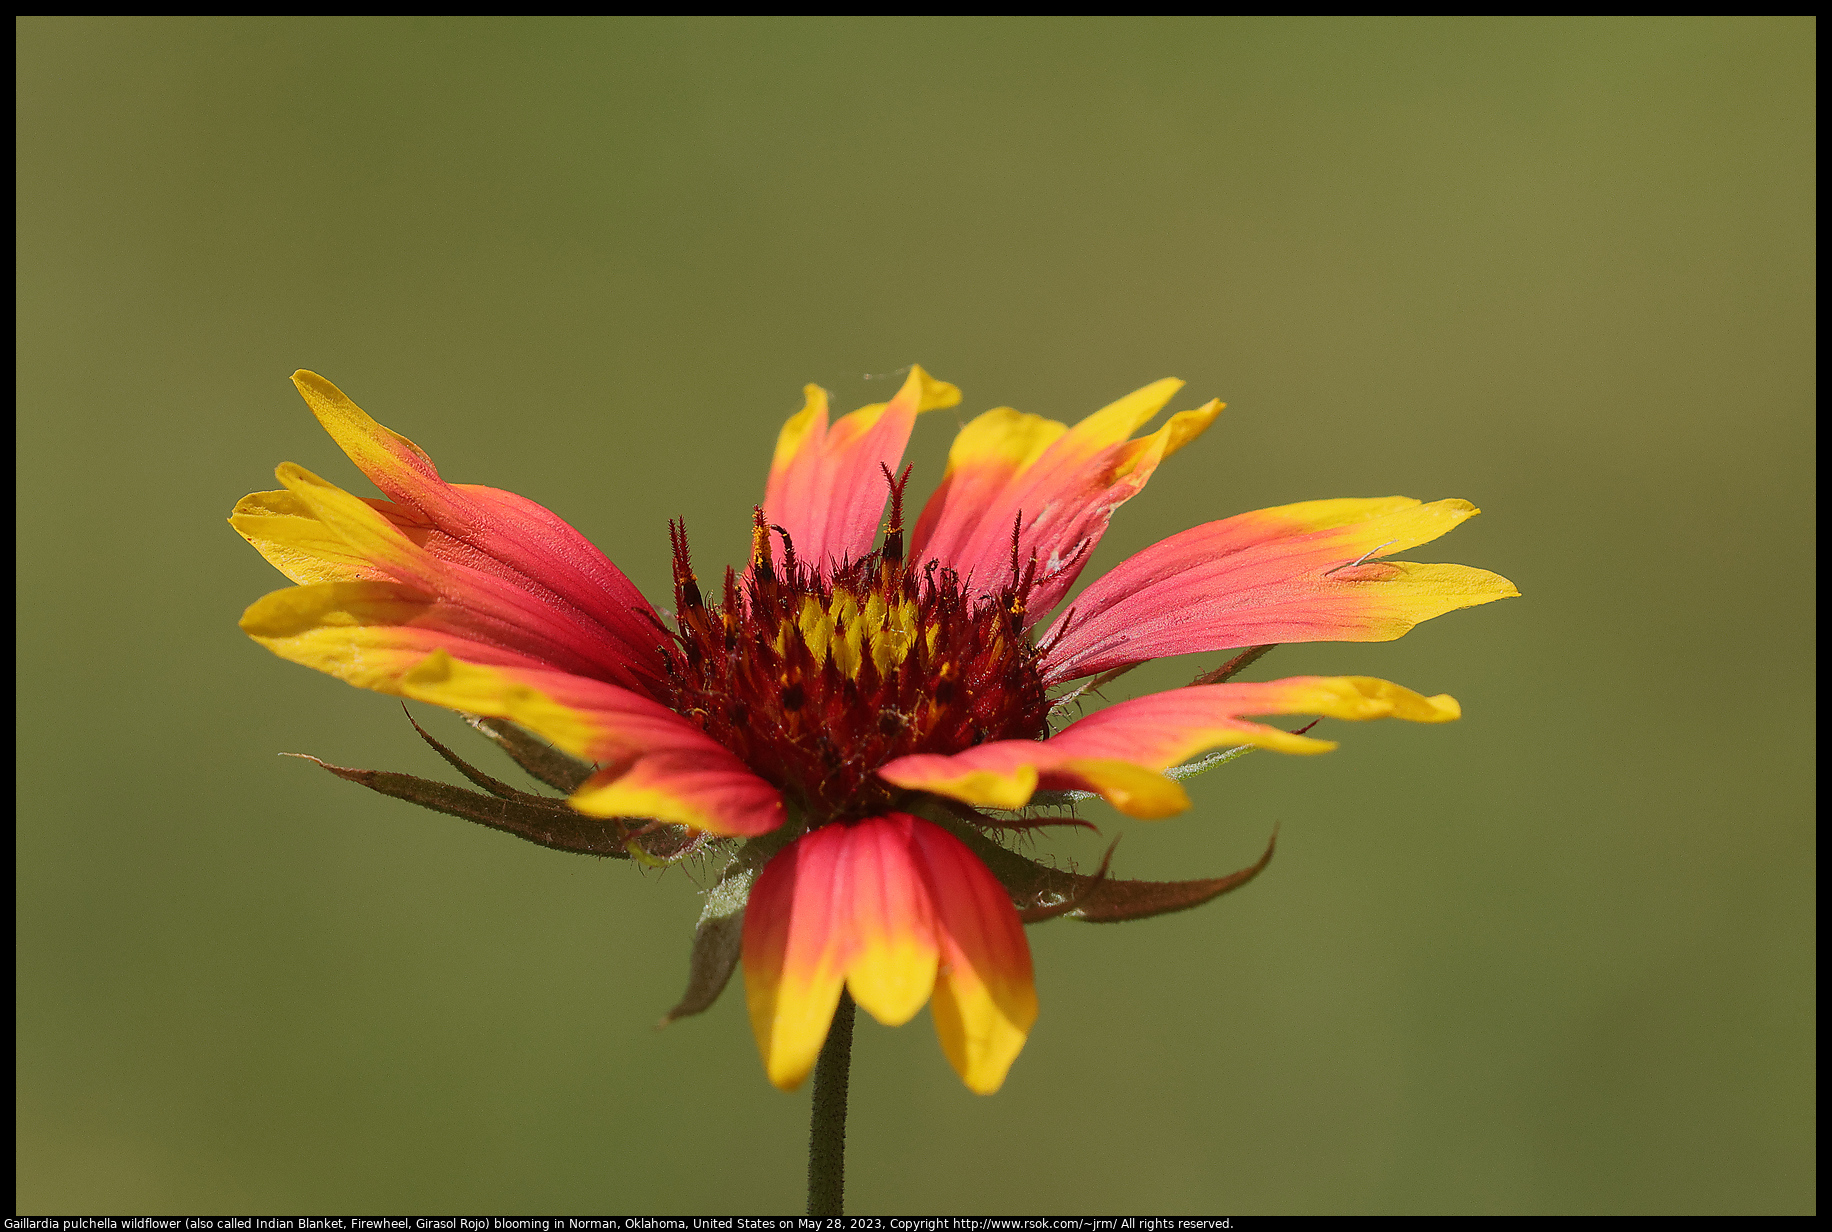 Gaillardia pulchella wildflower (also called Indian Blanket, Firewheel, Girasol Rojo) blooming in Norman, Oklahoma, United.States on May28, 2023